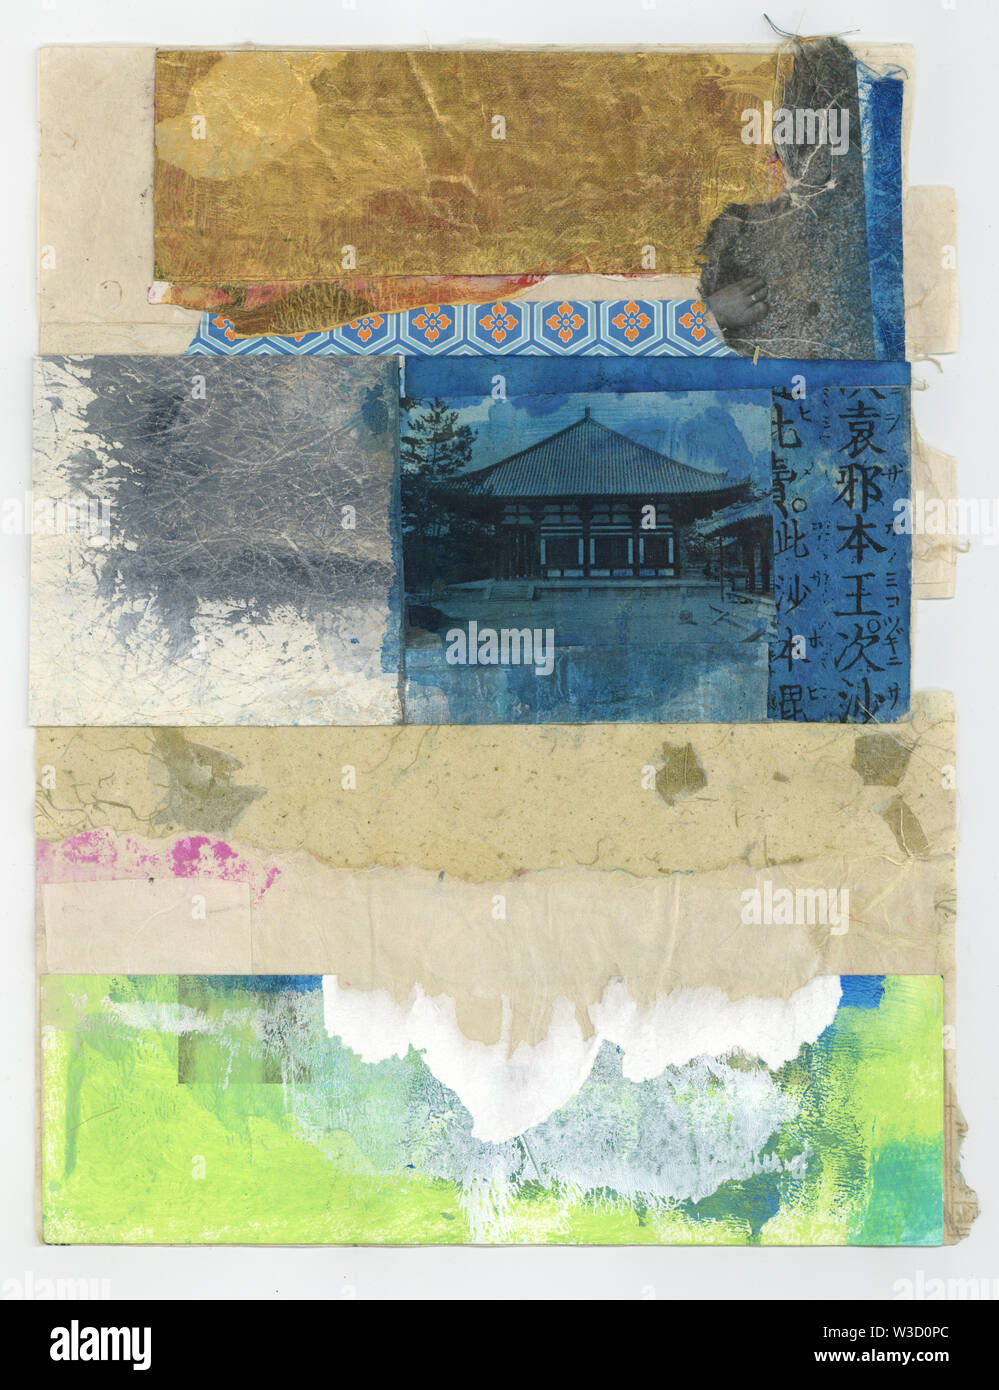 Wabi sabi zen artwork using mixed media collage with ink stains. Stock Photo